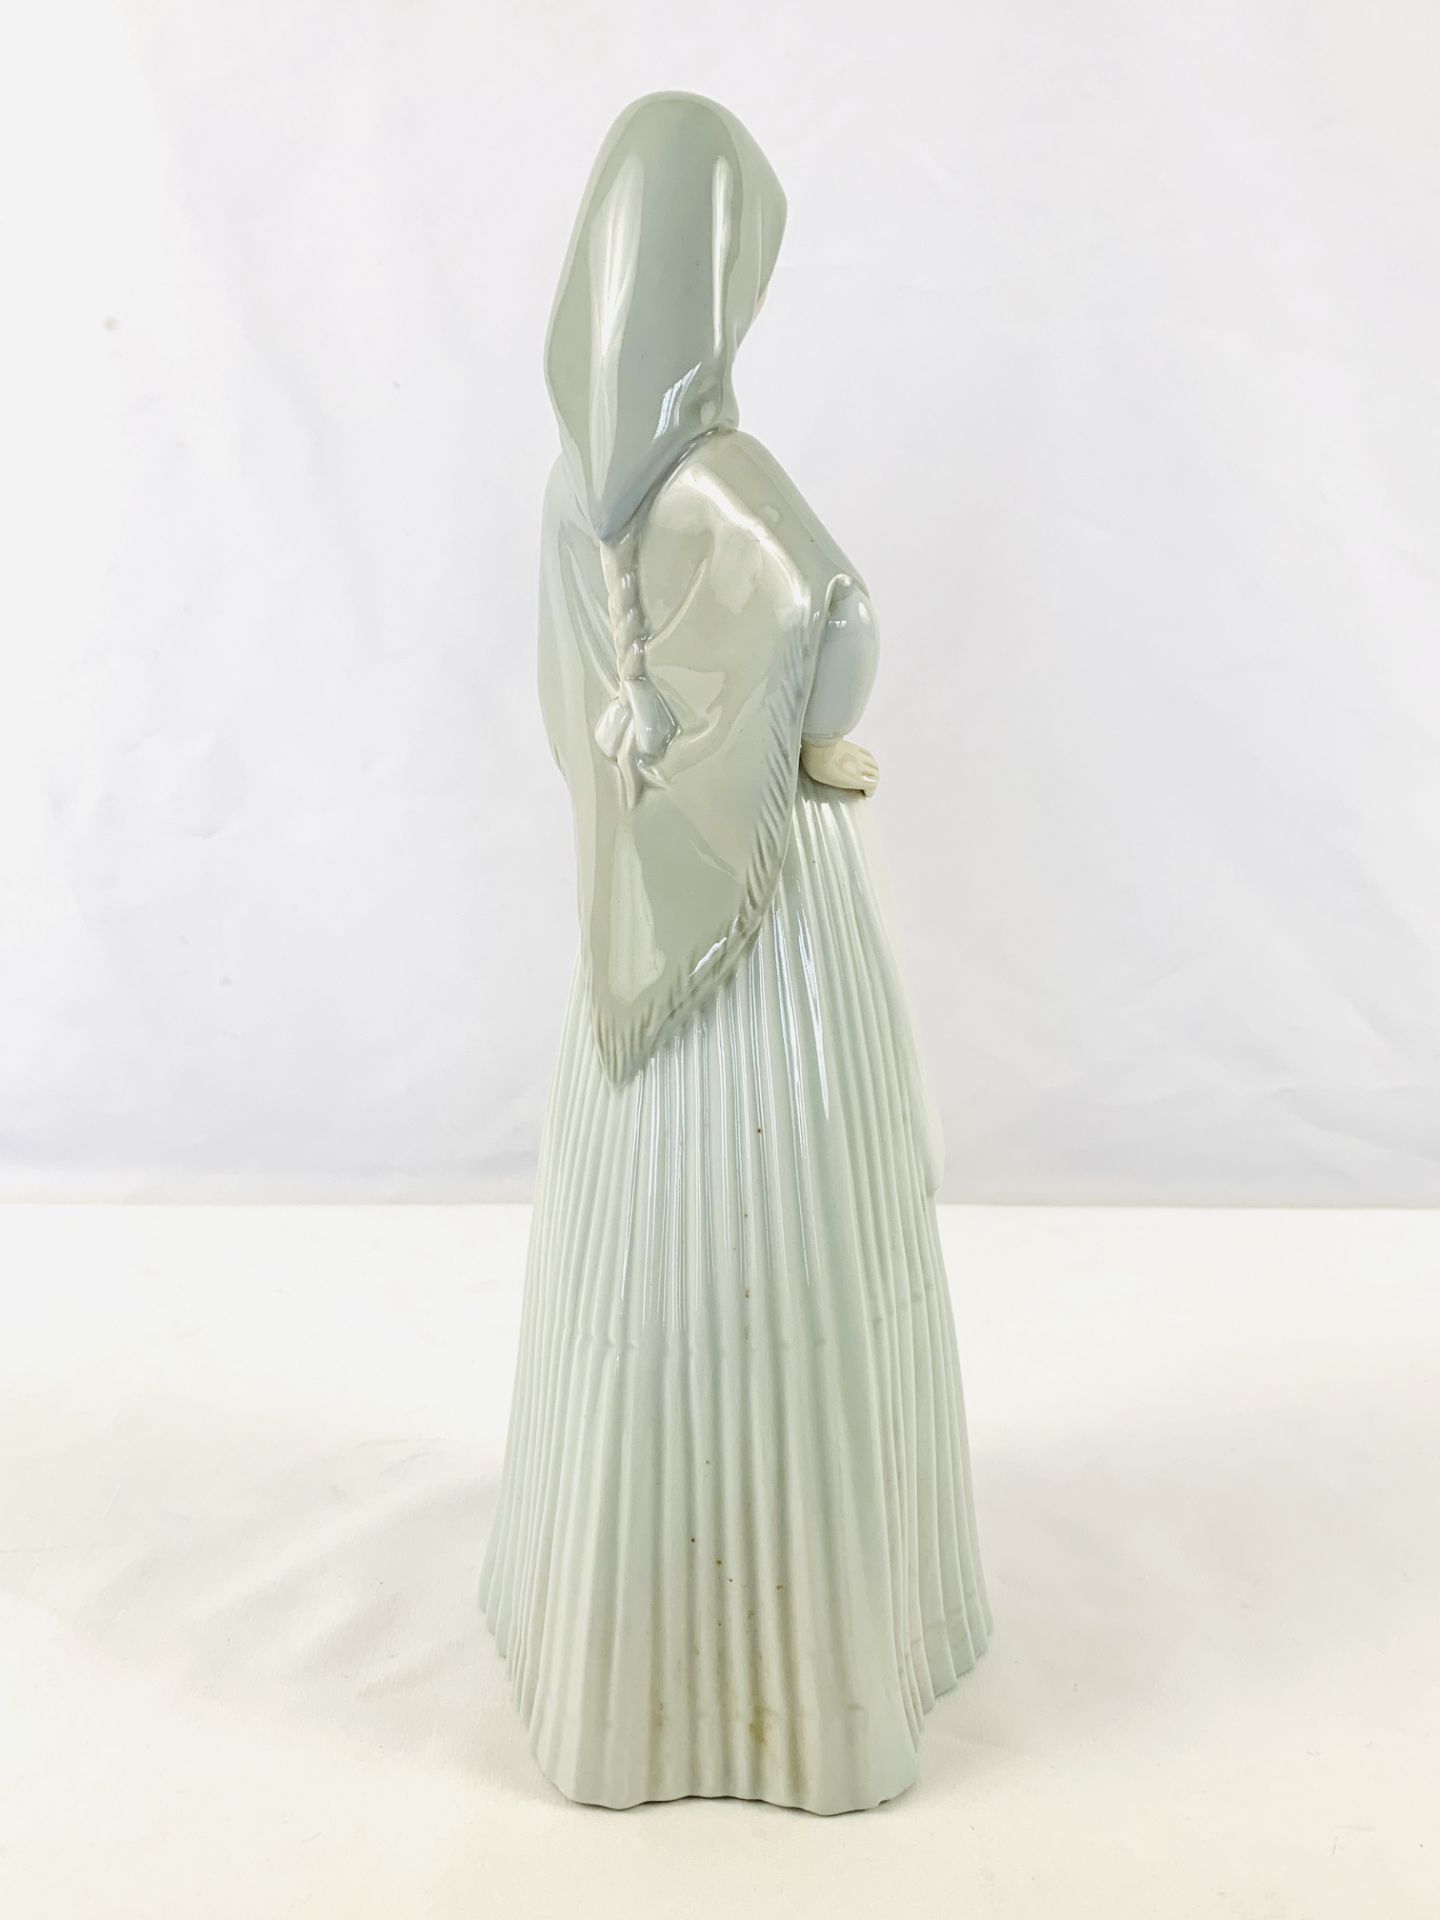 Figure of a woman by Porcelanas Miquel Requena SA, Cuart de Poblet - Image 3 of 3